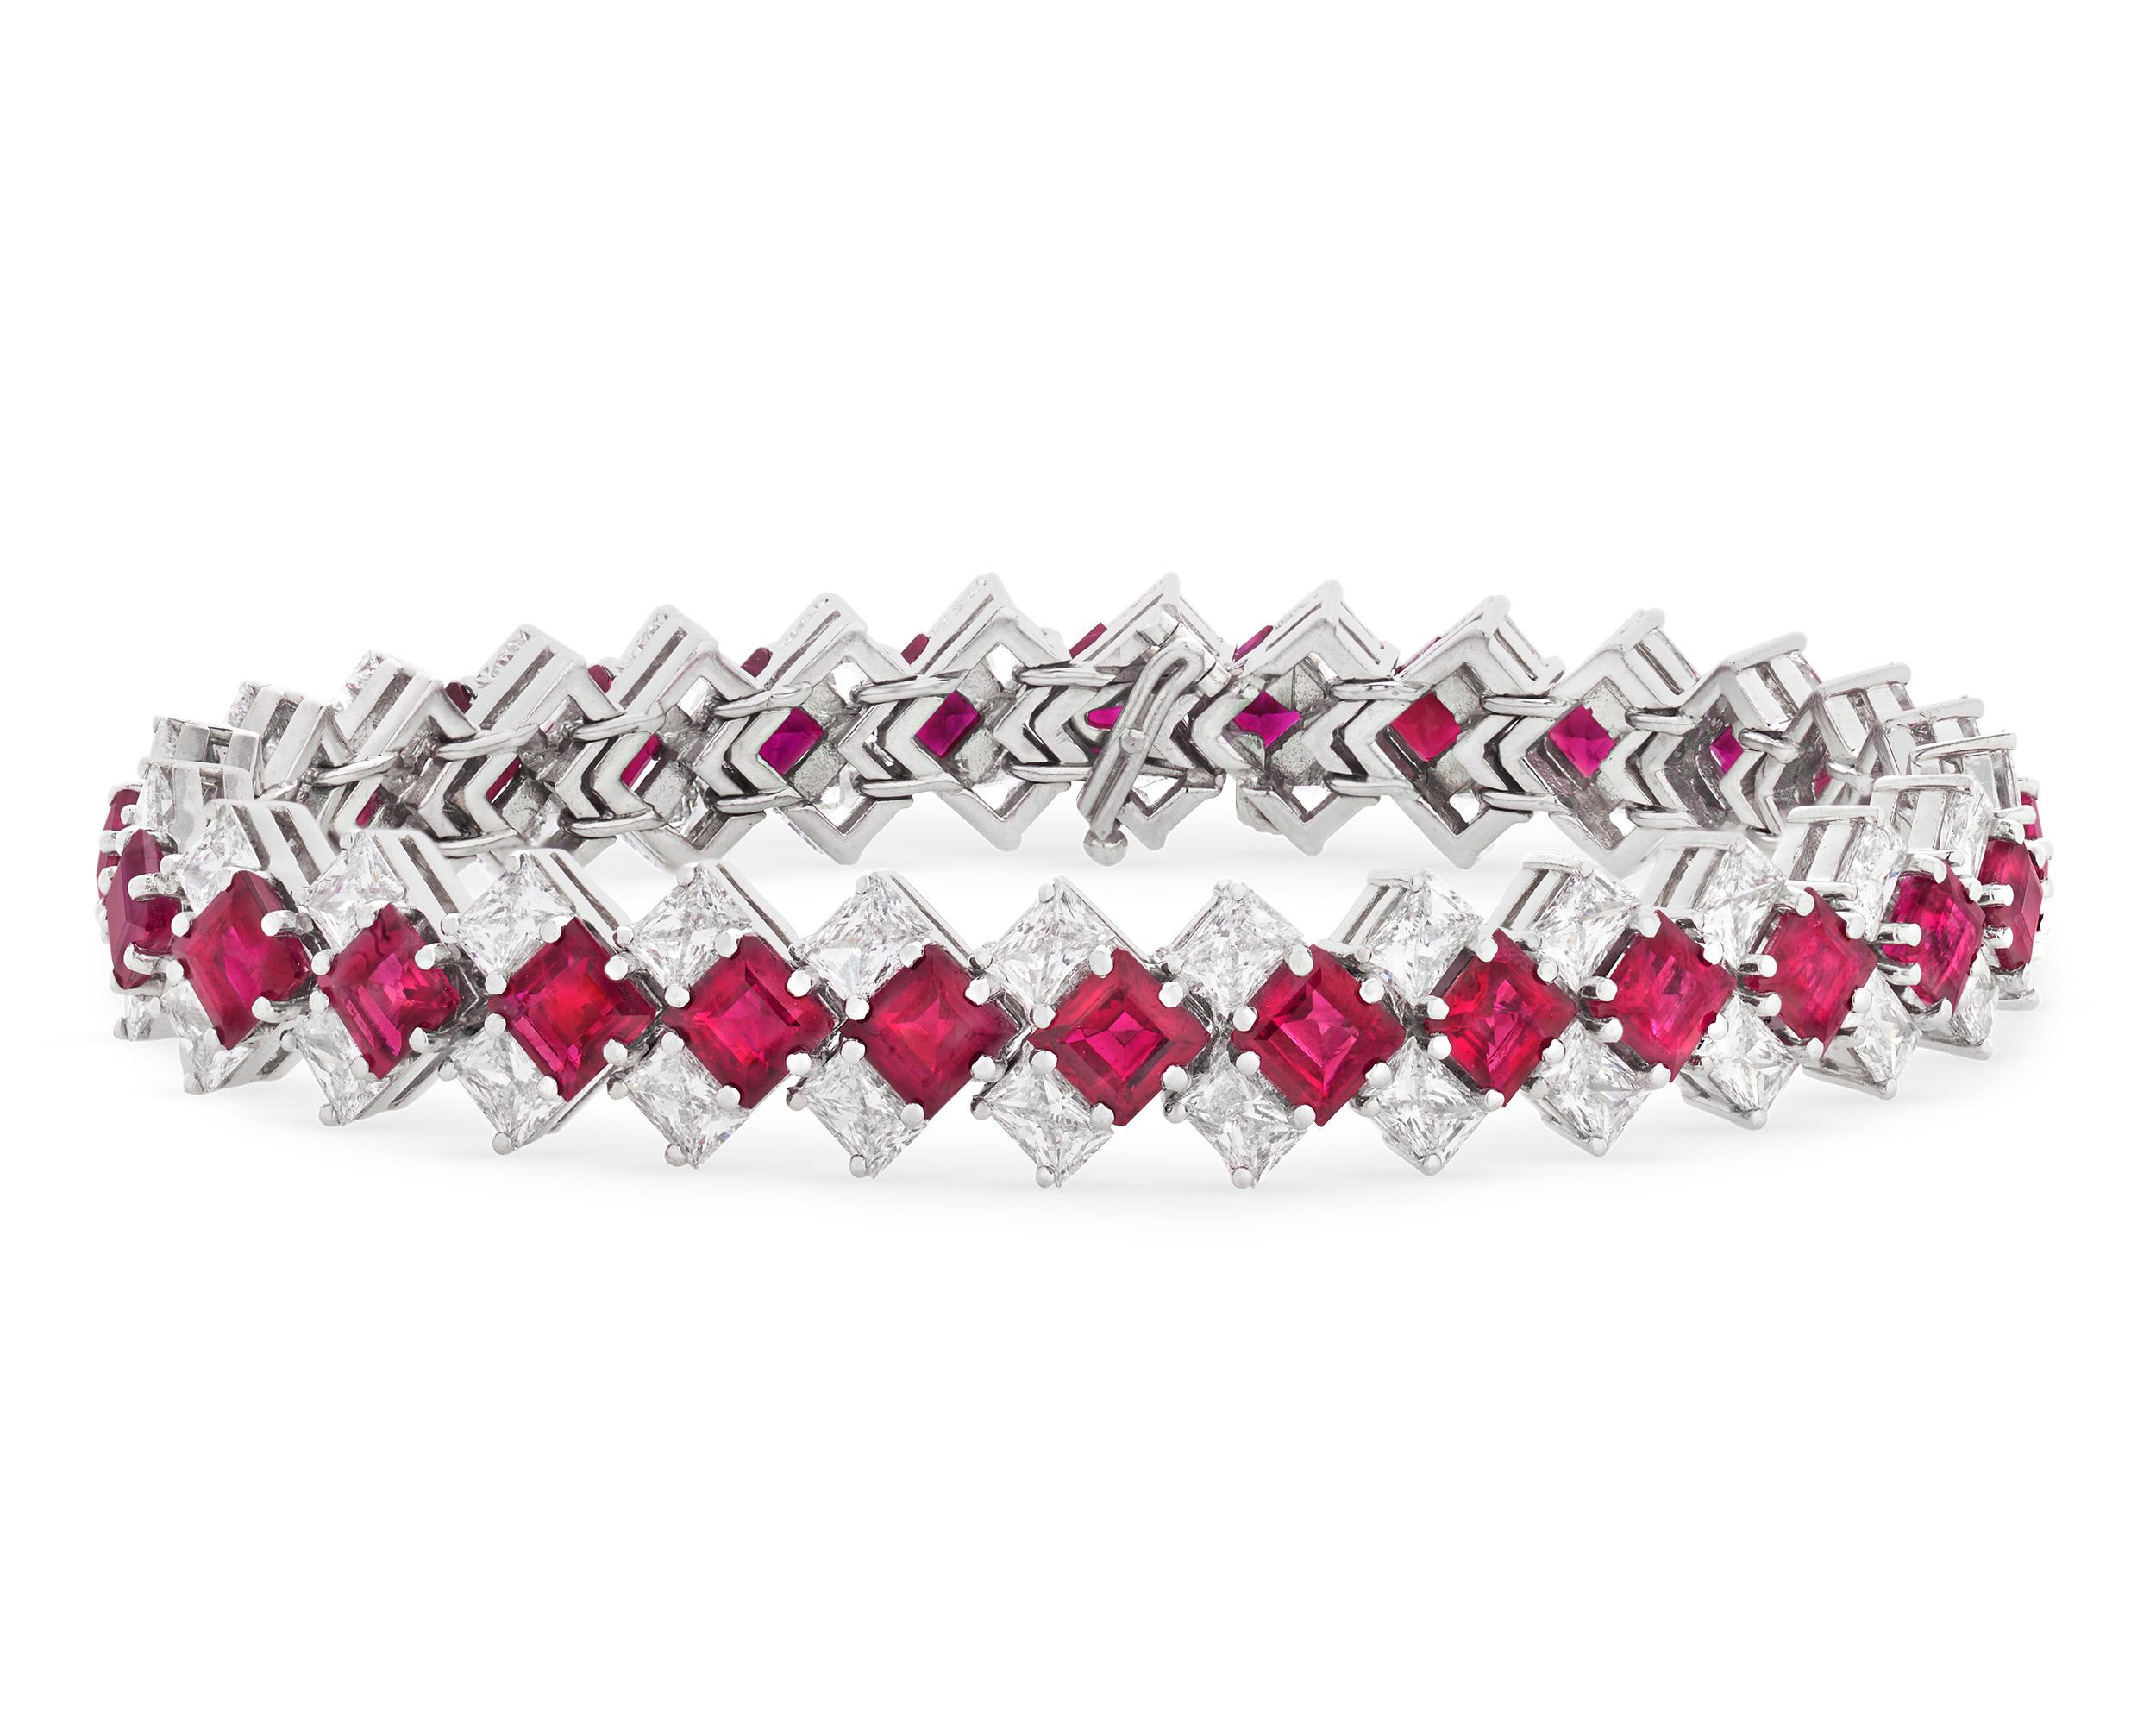 Brilliant Cut Burma Ruby Bracelet, 16.80 Carat